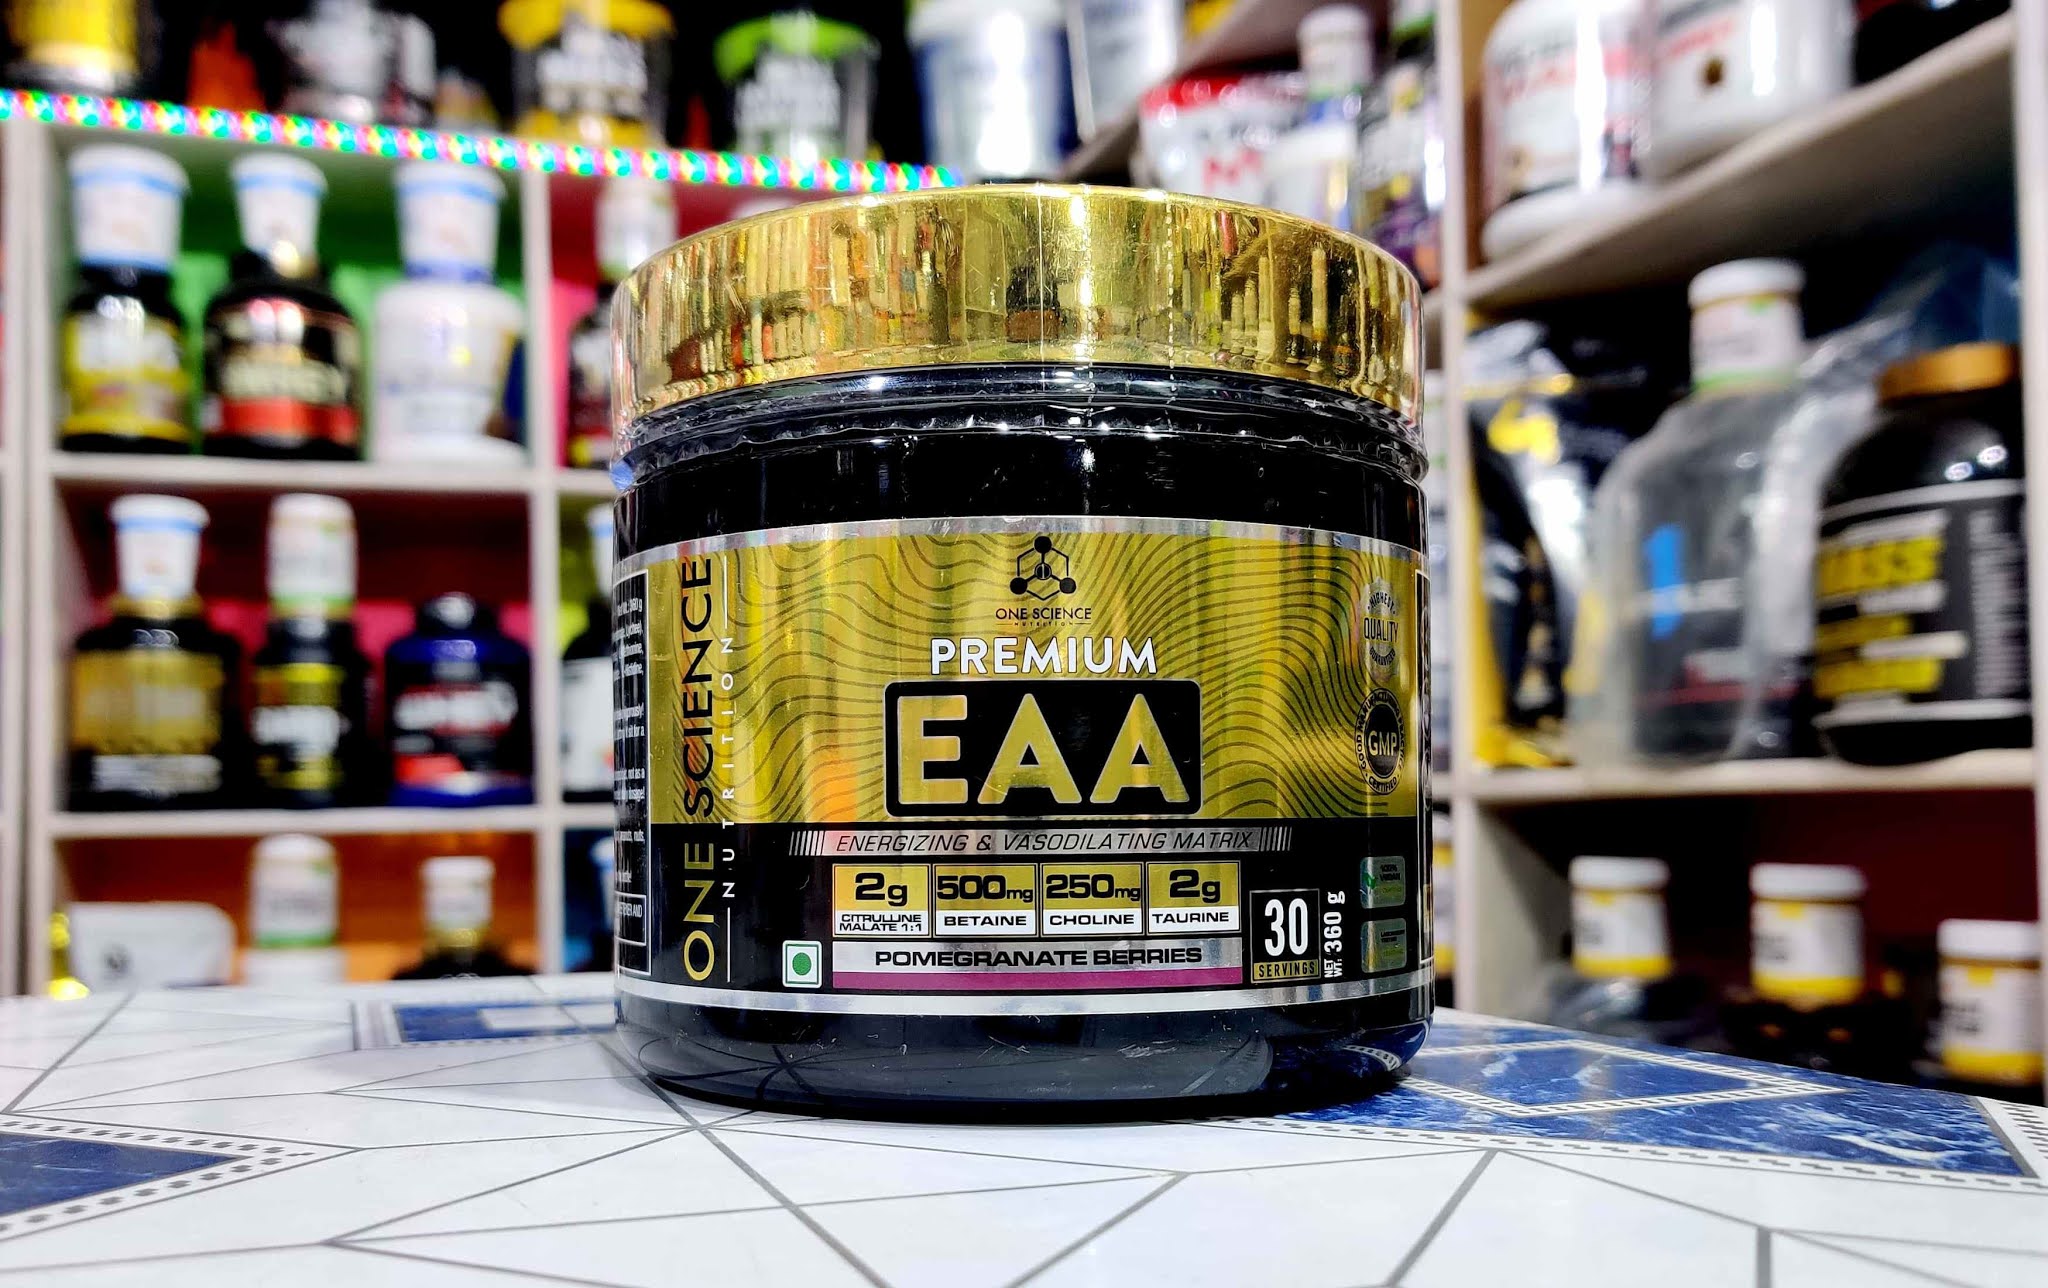 EAA - Essential Amino Acids 30 servings - Build Muscle